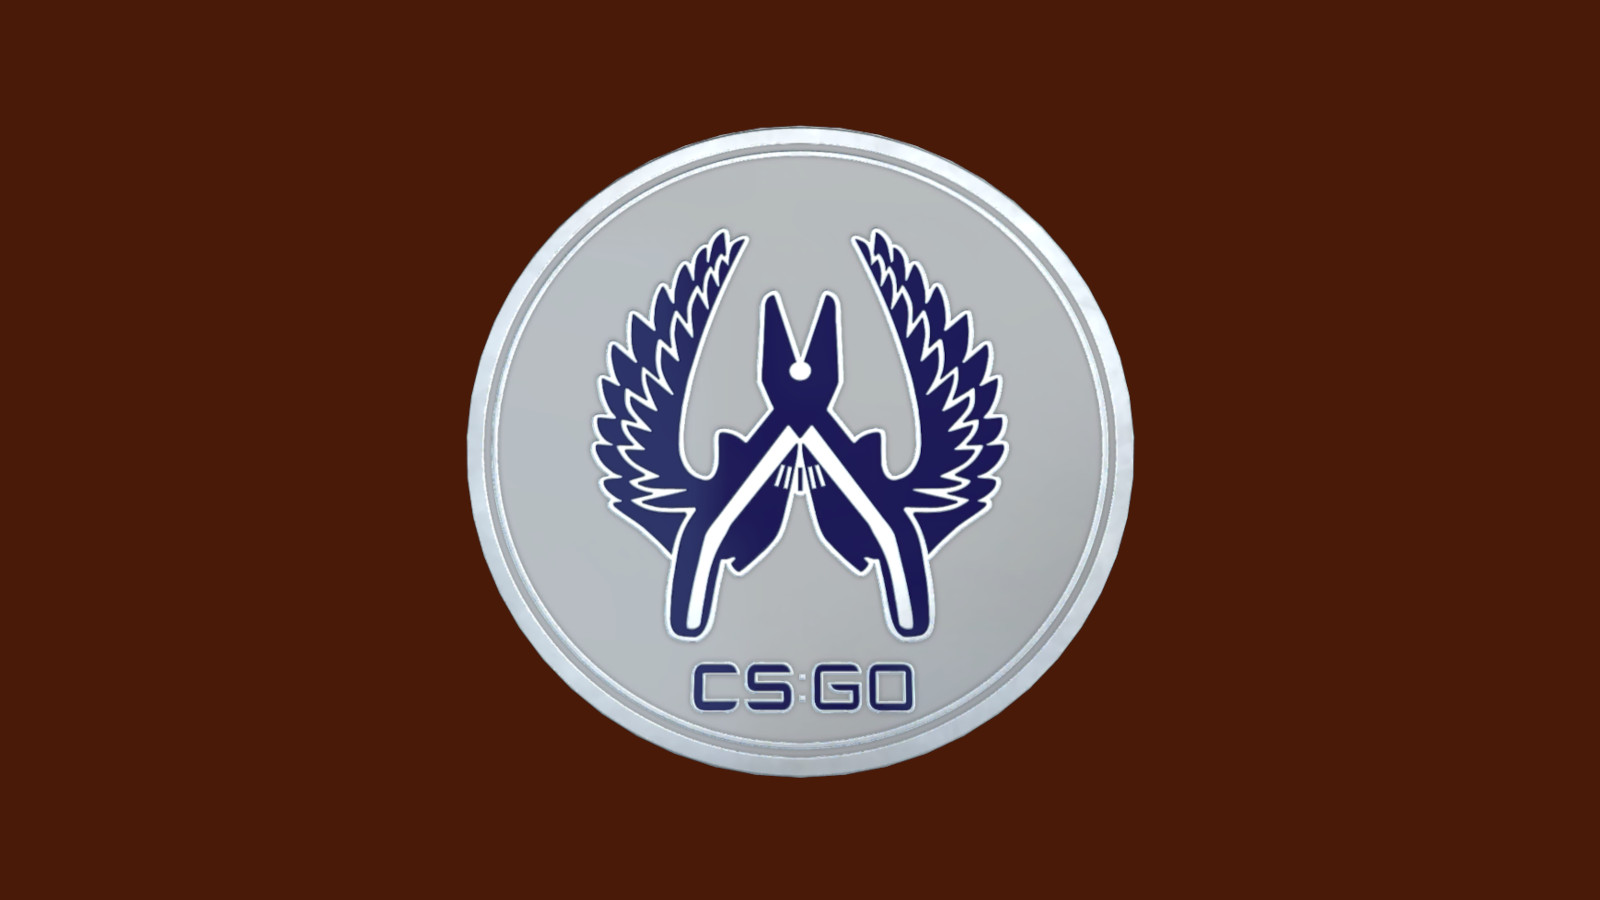 CS:GO - Series 3 - Guardian 3 Collectible Pin